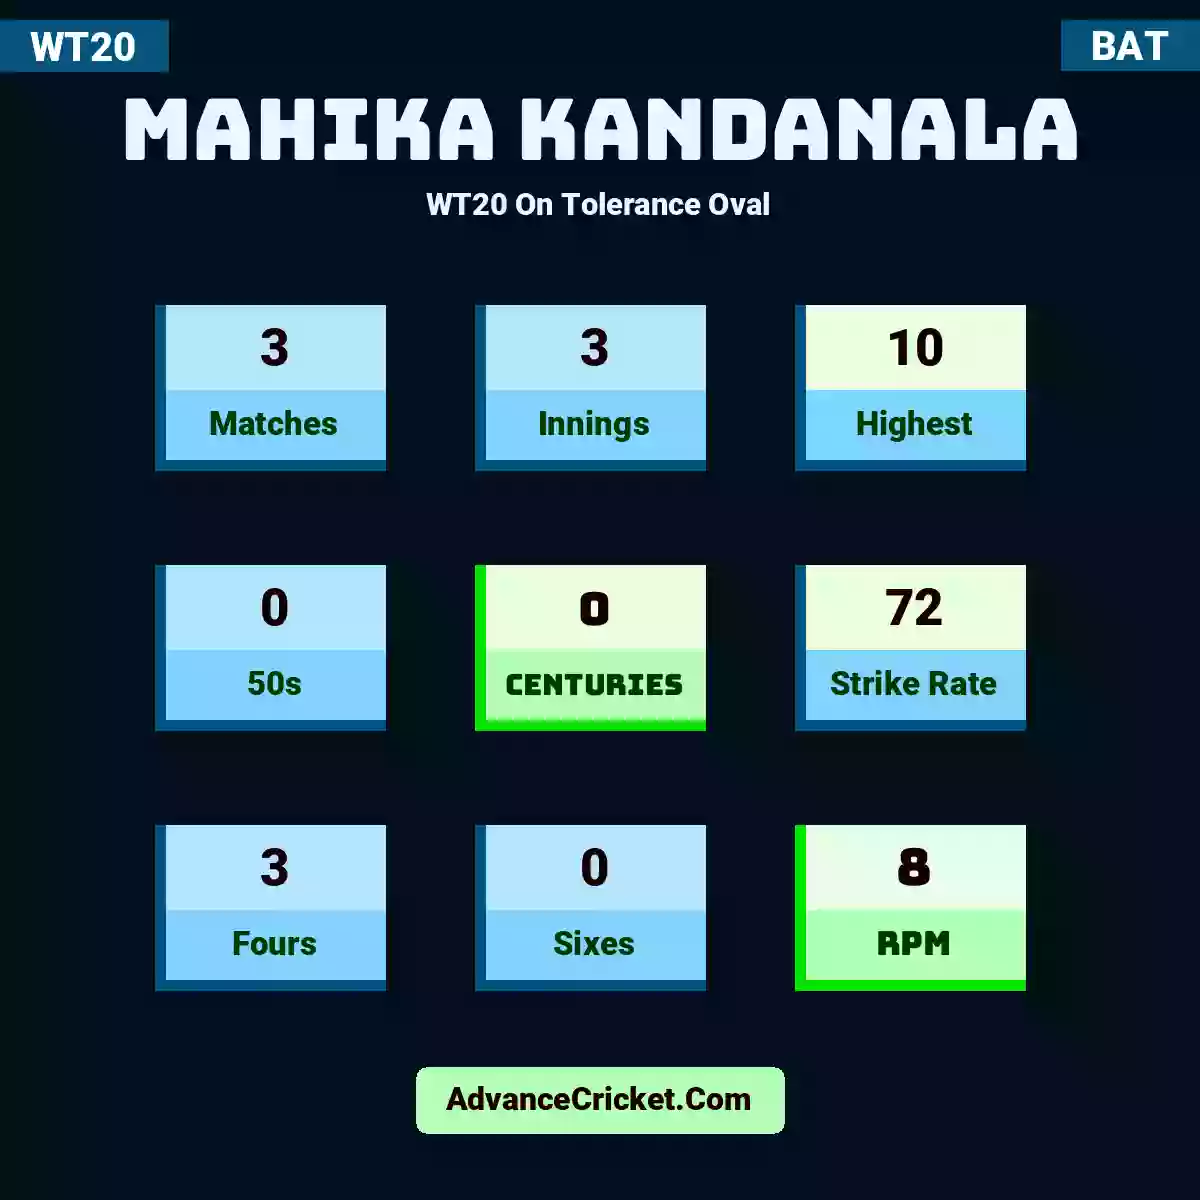 Mahika Kandanala WT20  On Tolerance Oval, Mahika Kandanala played 3 matches, scored 10 runs as highest, 0 half-centuries, and 0 centuries, with a strike rate of 72. M.Kandanala hit 3 fours and 0 sixes, with an RPM of 8.